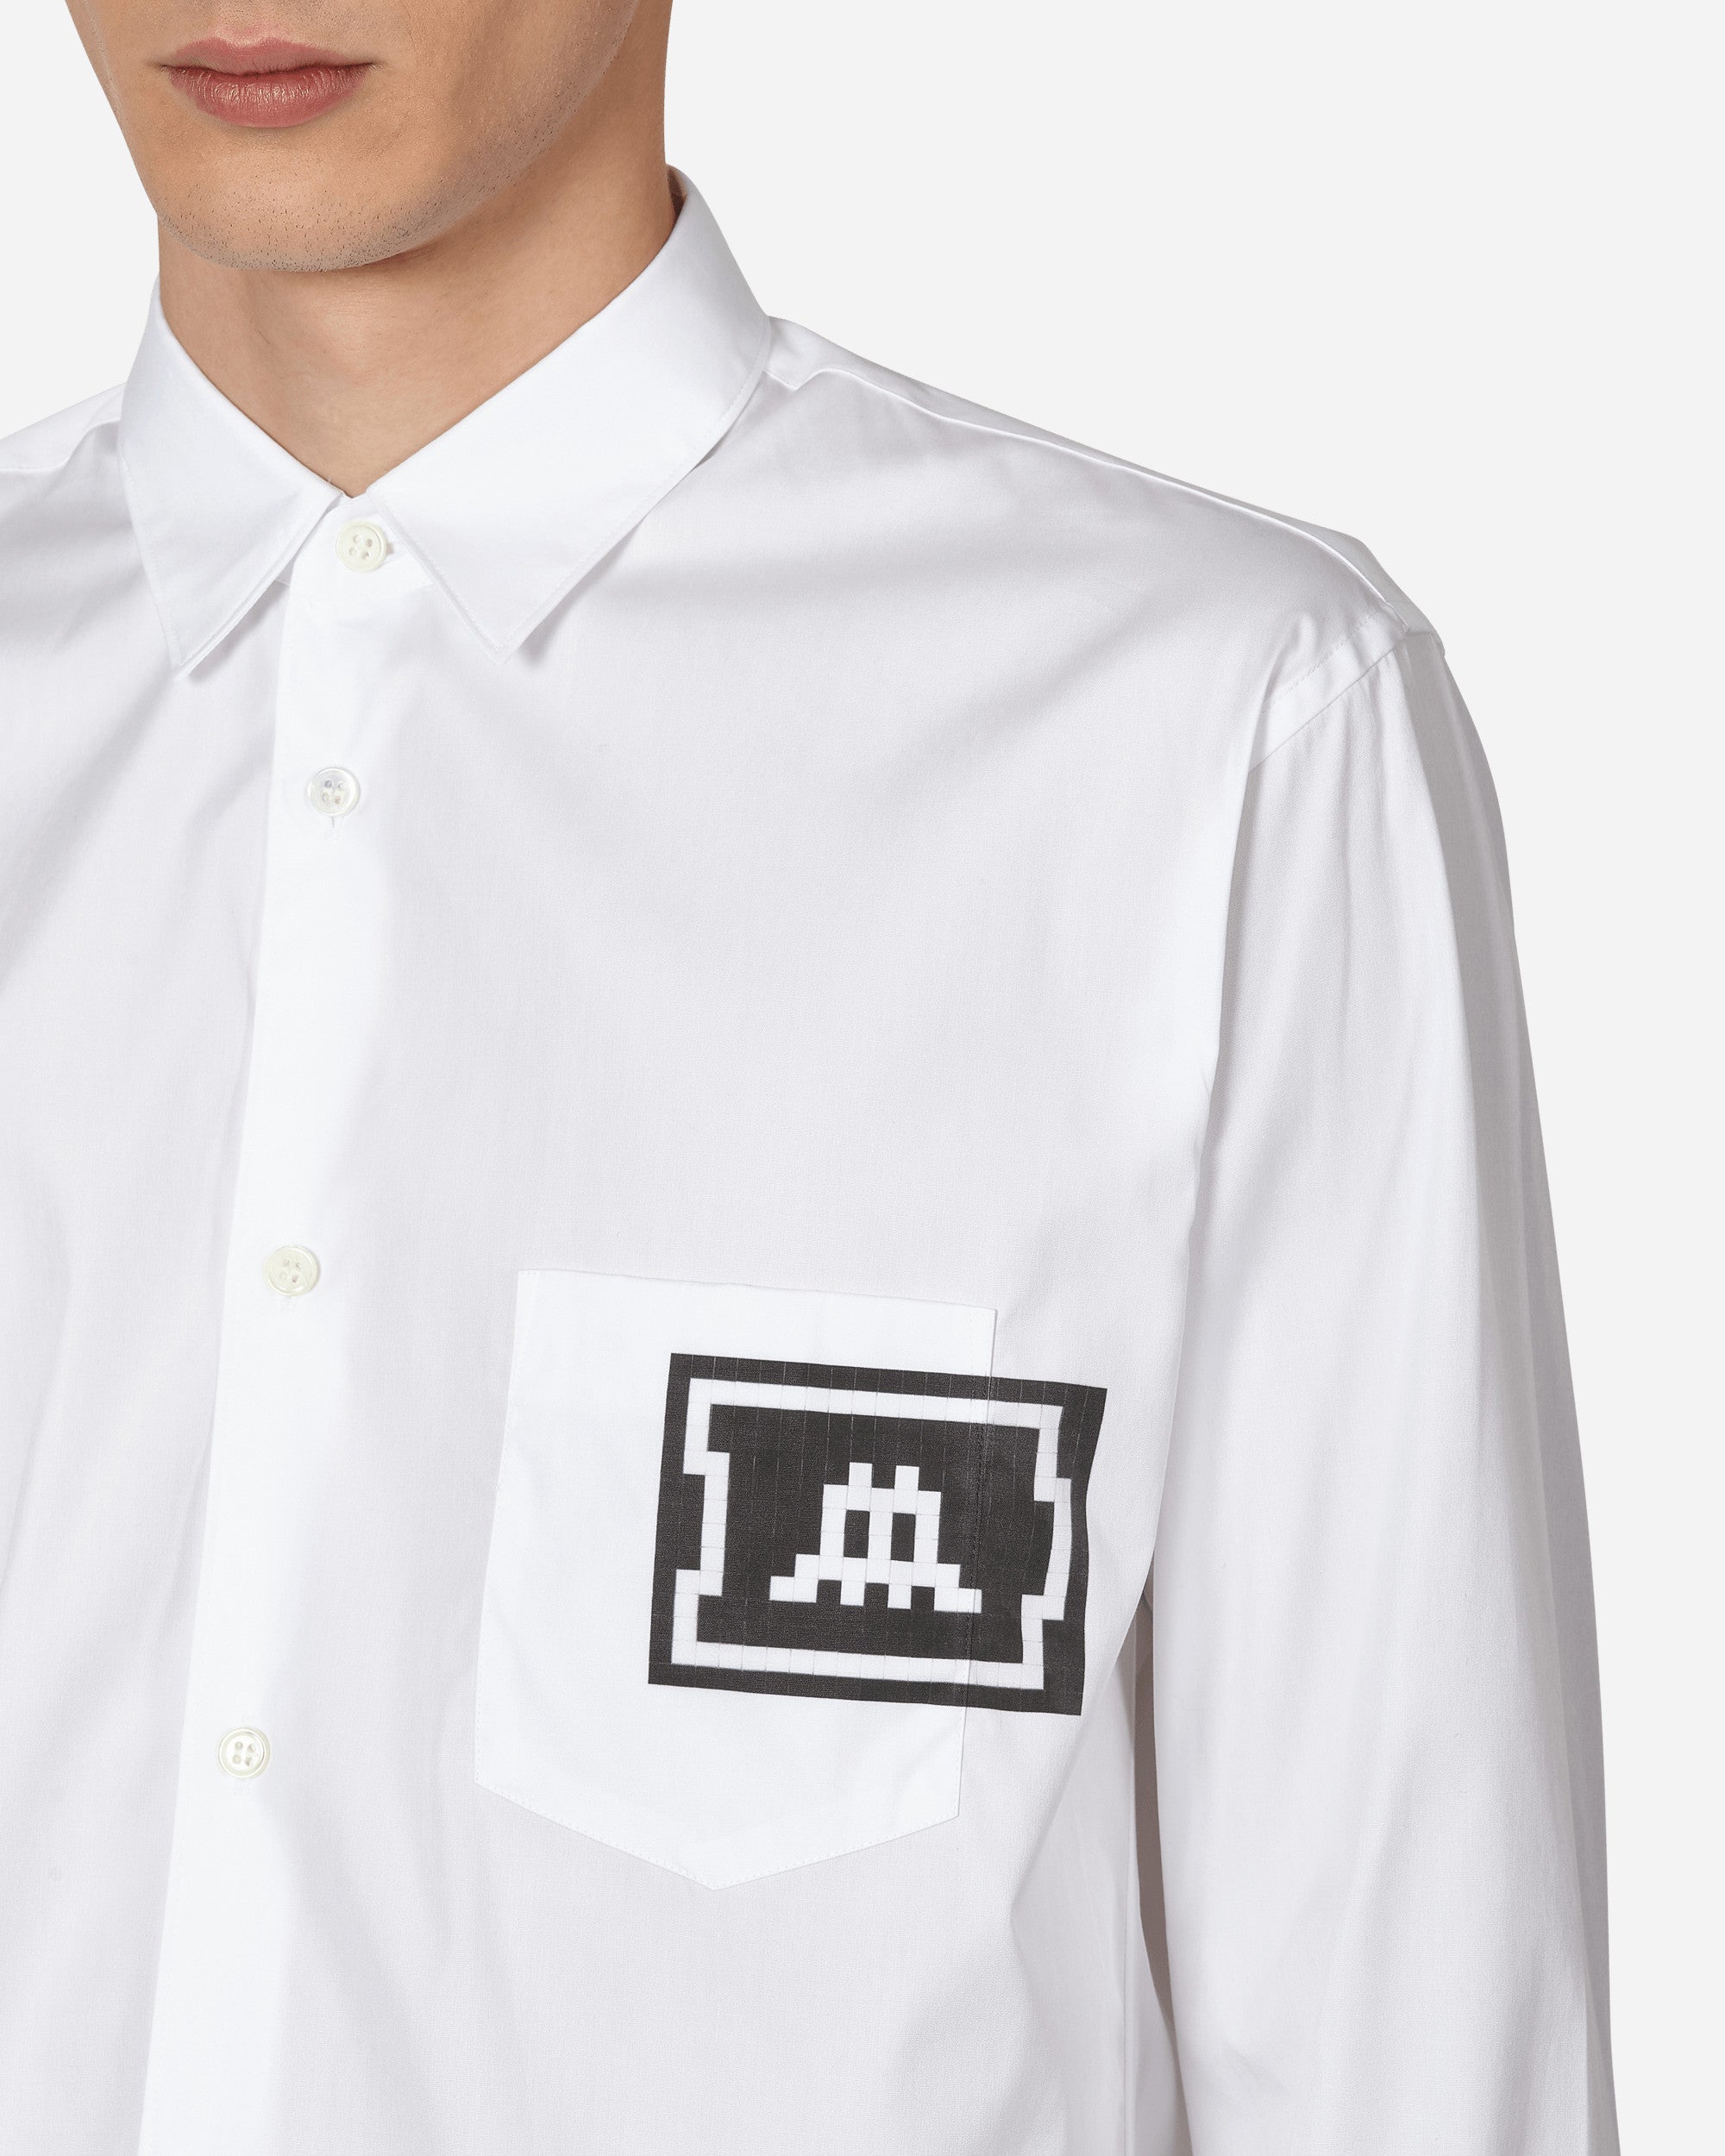 Comme Des Garçons Shirt Mens Shirt Woven White Shirts Longsleeve FJ-B032-W22 1